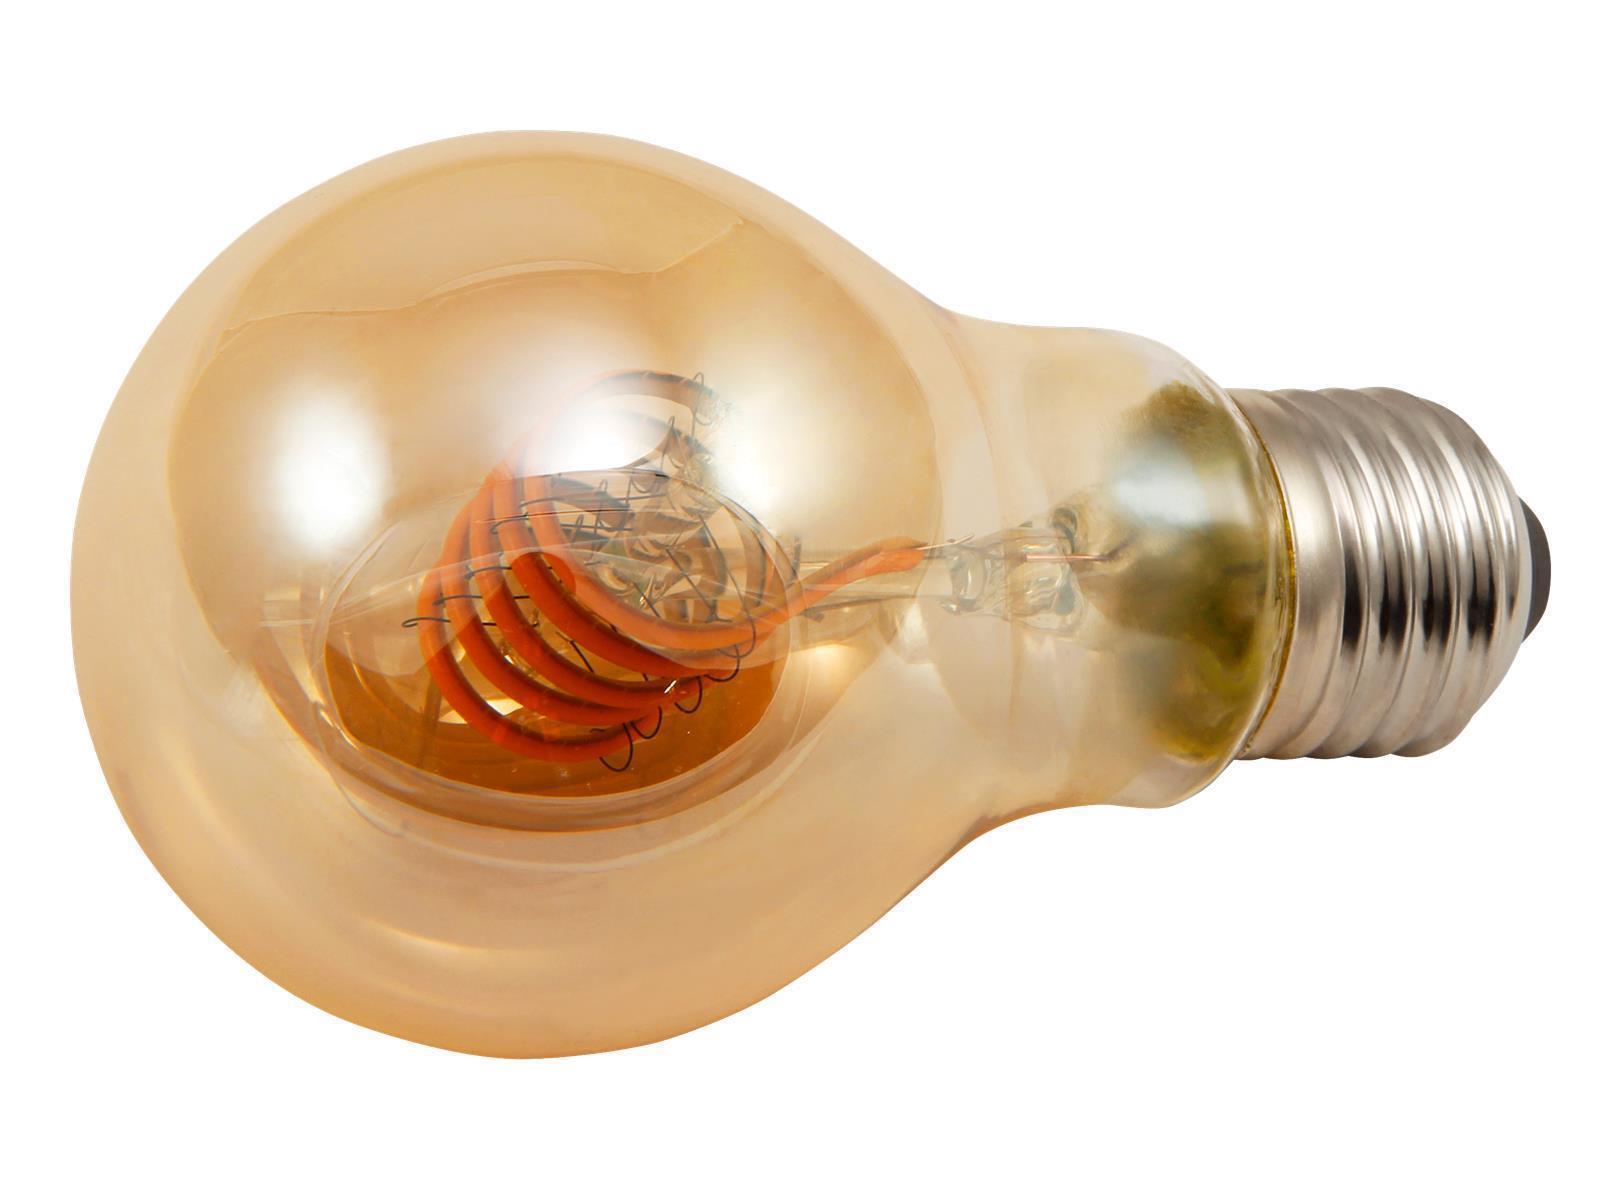 LED Filament Glühlampe McShine ''Retro'' E27, 6W, 490lm, warmweiß, goldenes Glas